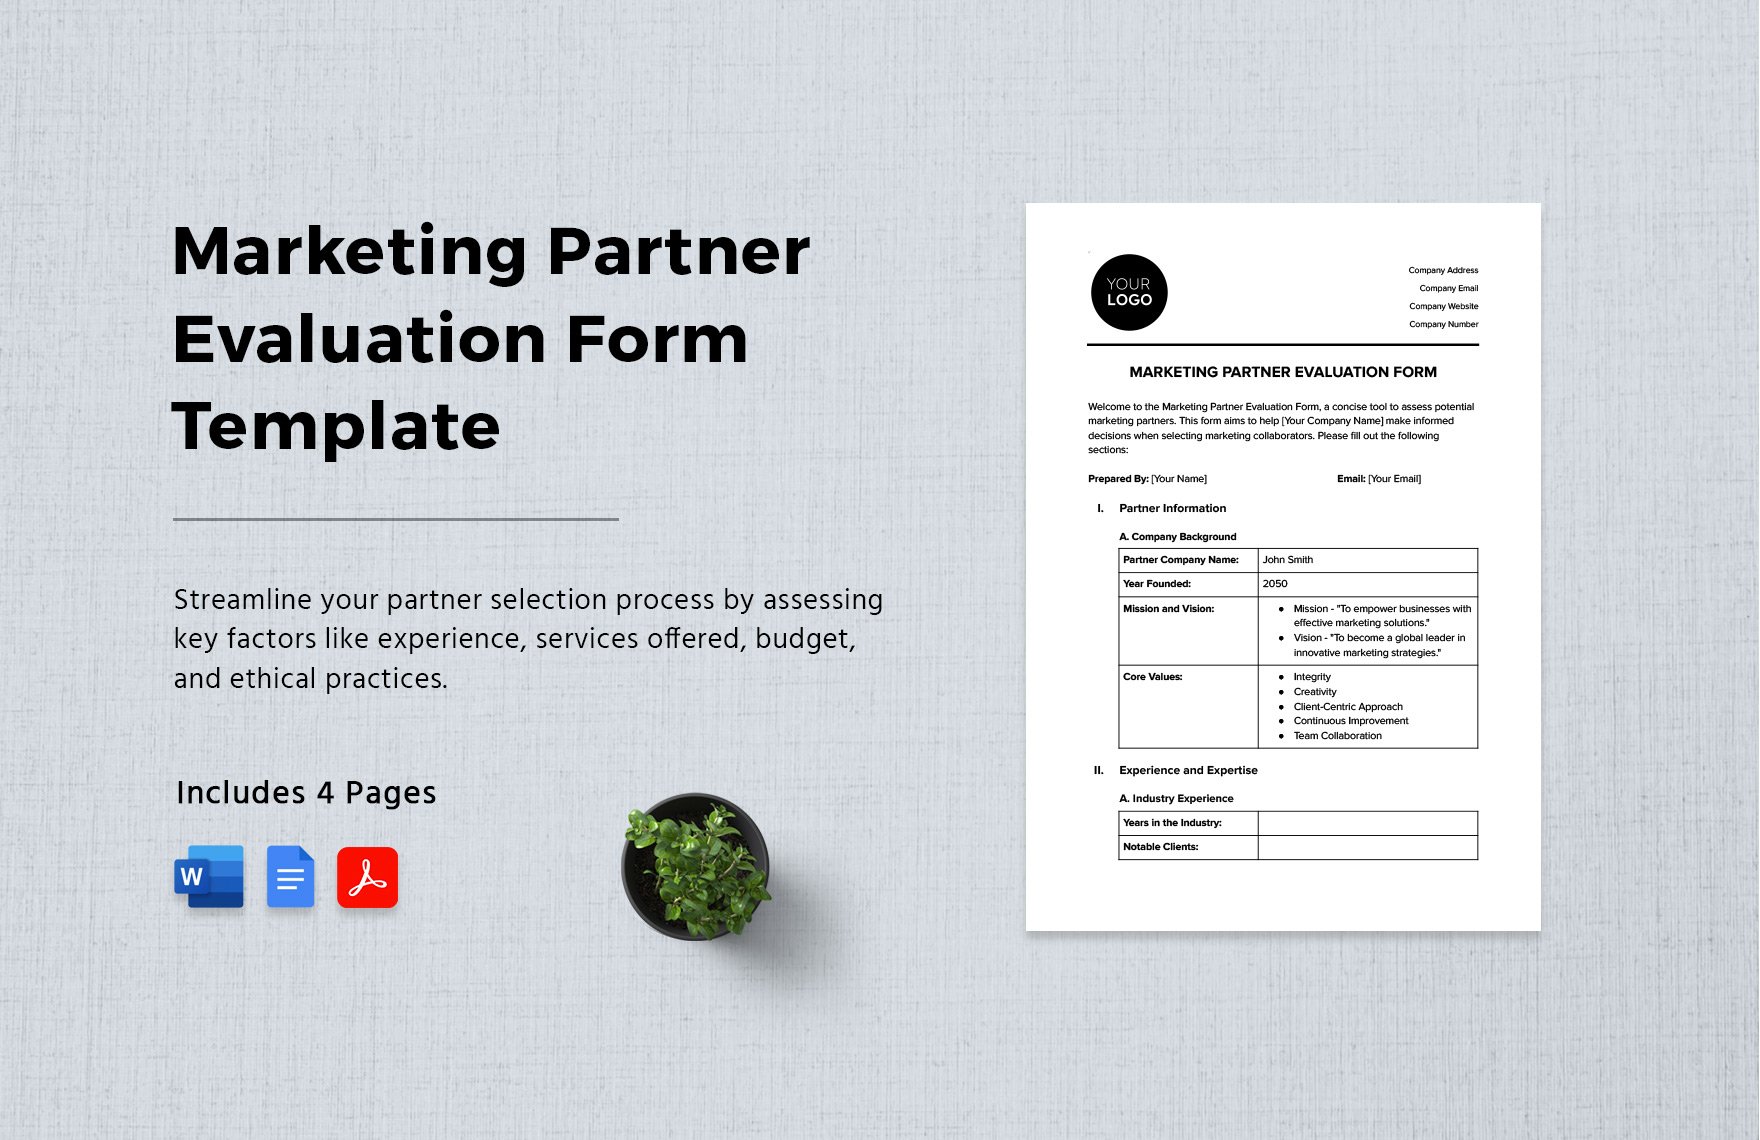 Marketing Partner Evaluation Form Template in Word, Google Docs, PDF